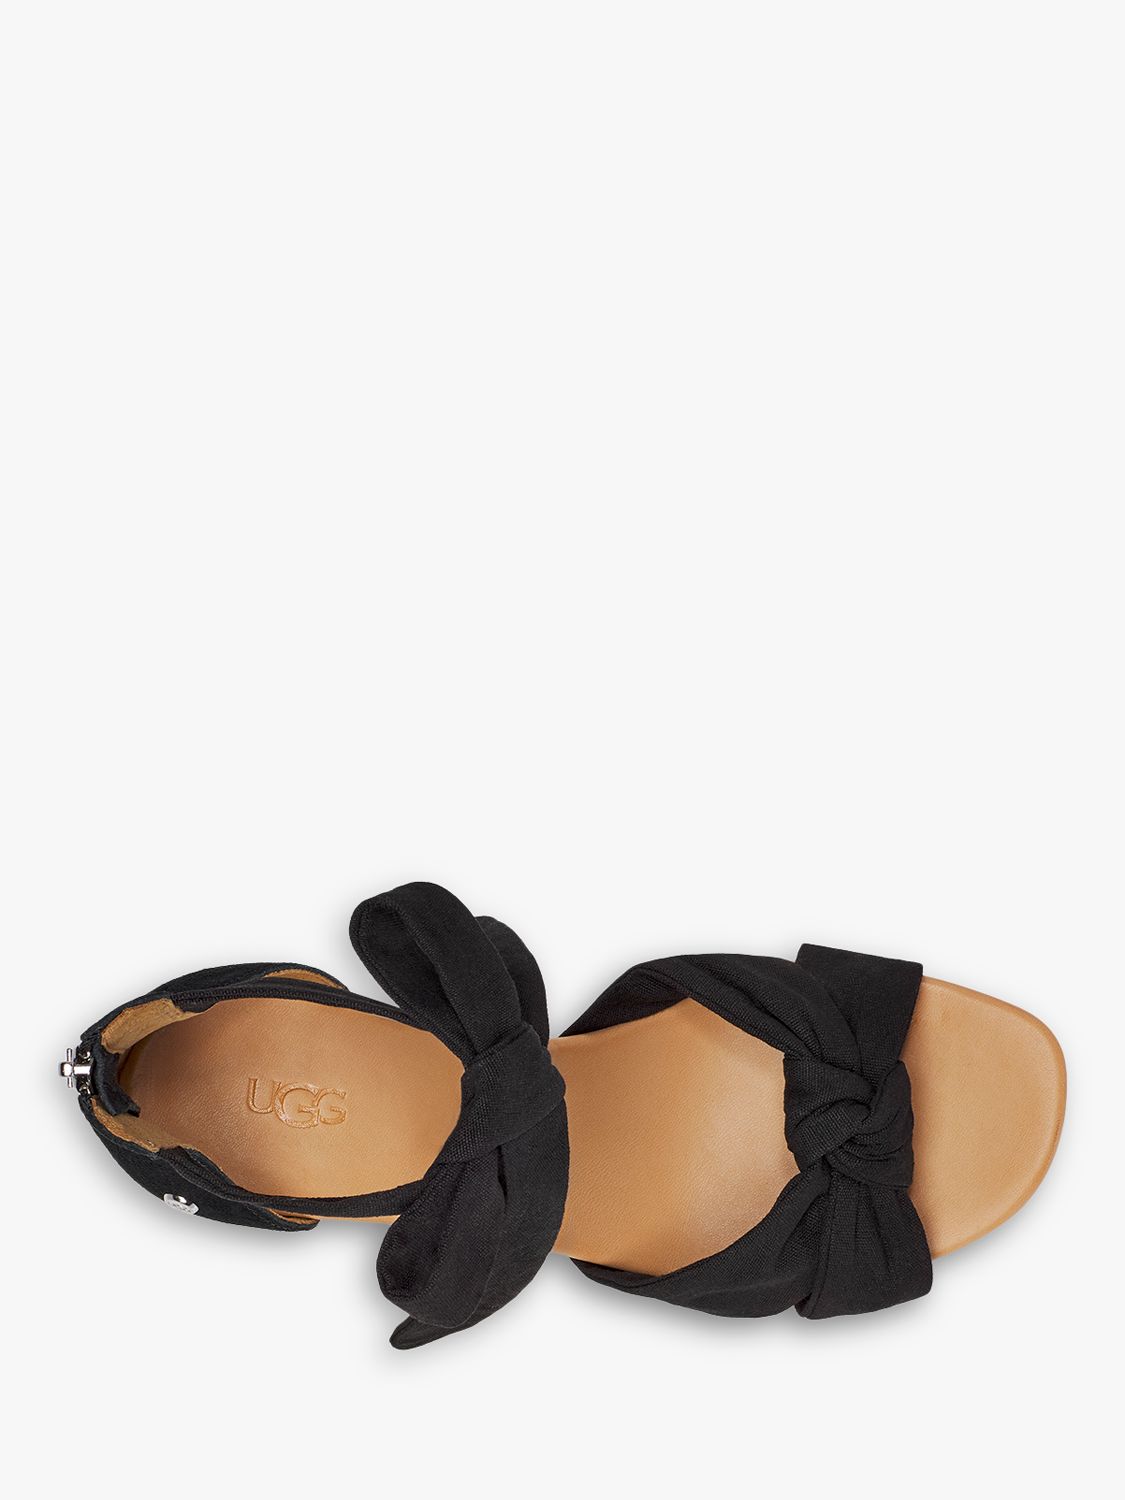 UGG Yarrow Wedge Sandals, Black, 6